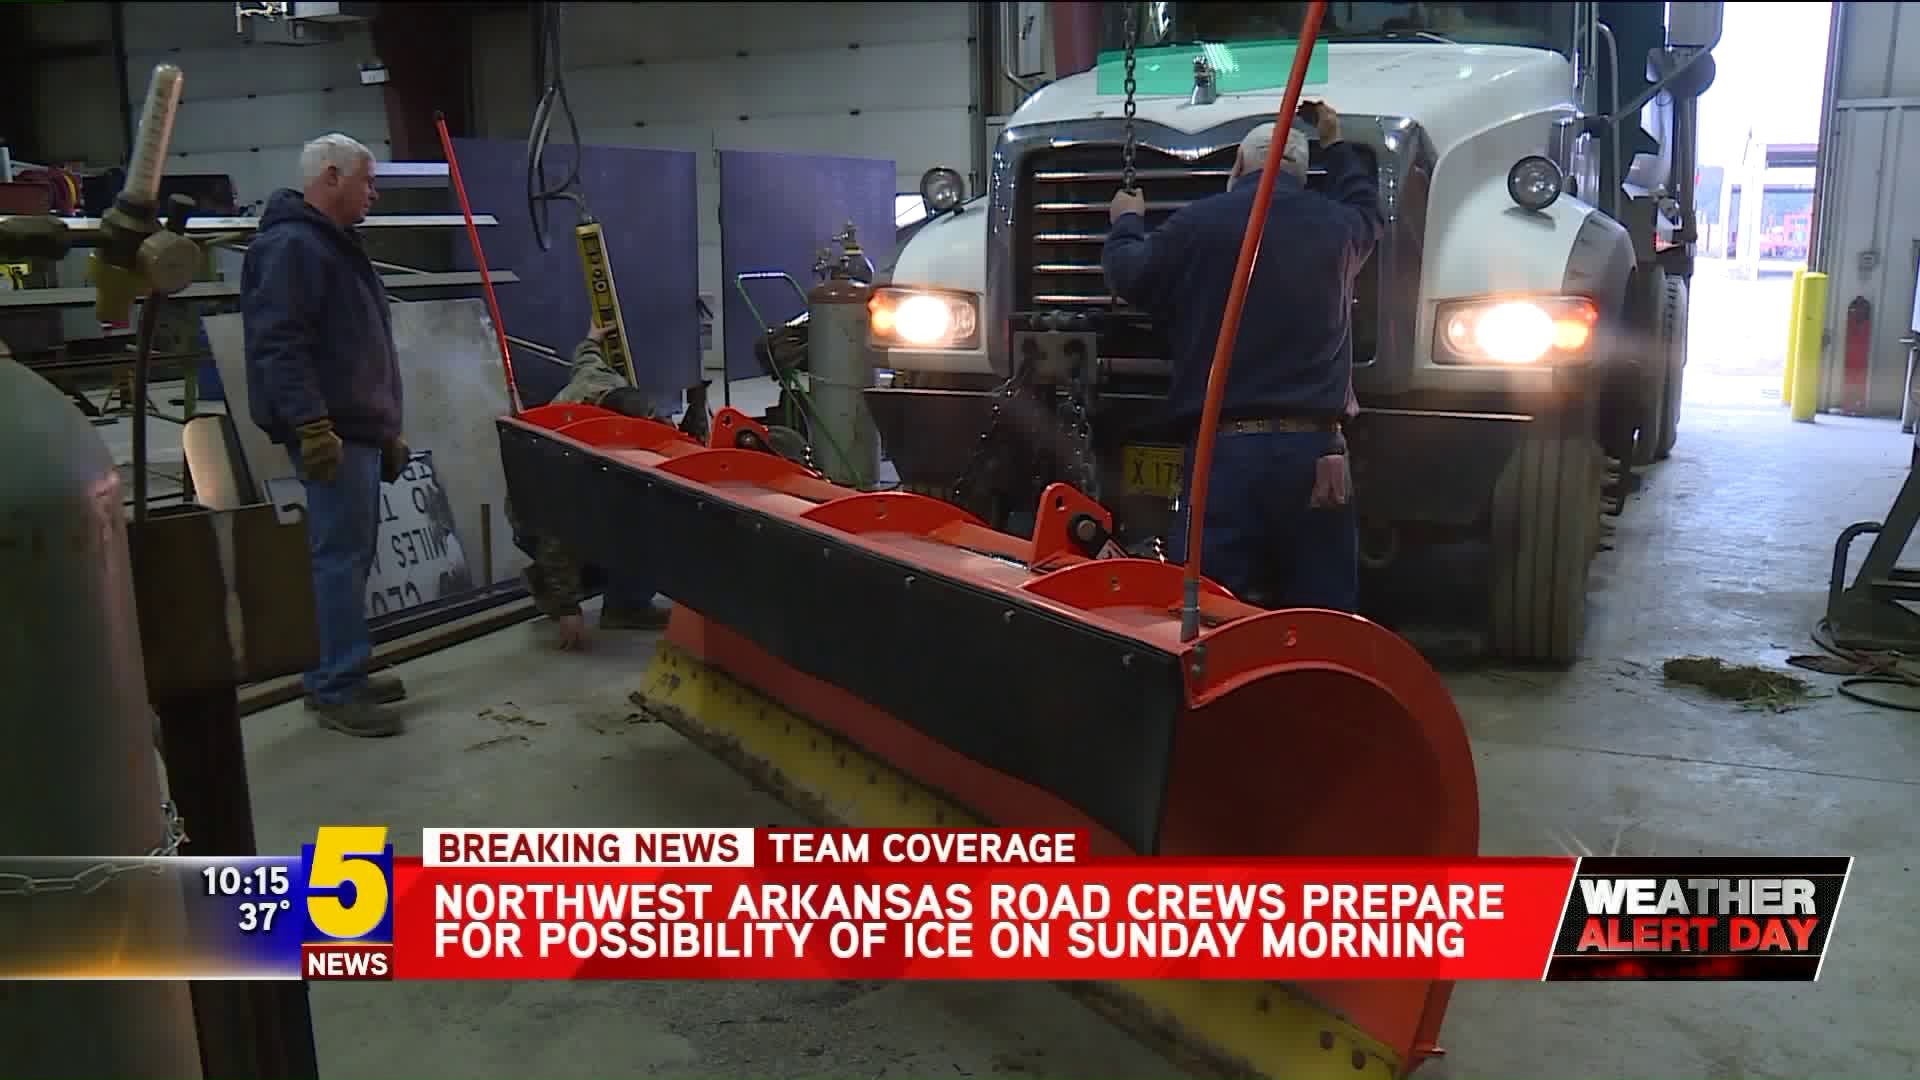 NORTHWEST ARKANSAS ROAD CREWS PREPARE FOR POSSIBILITY OF ICE ON SUNDAY MORNING